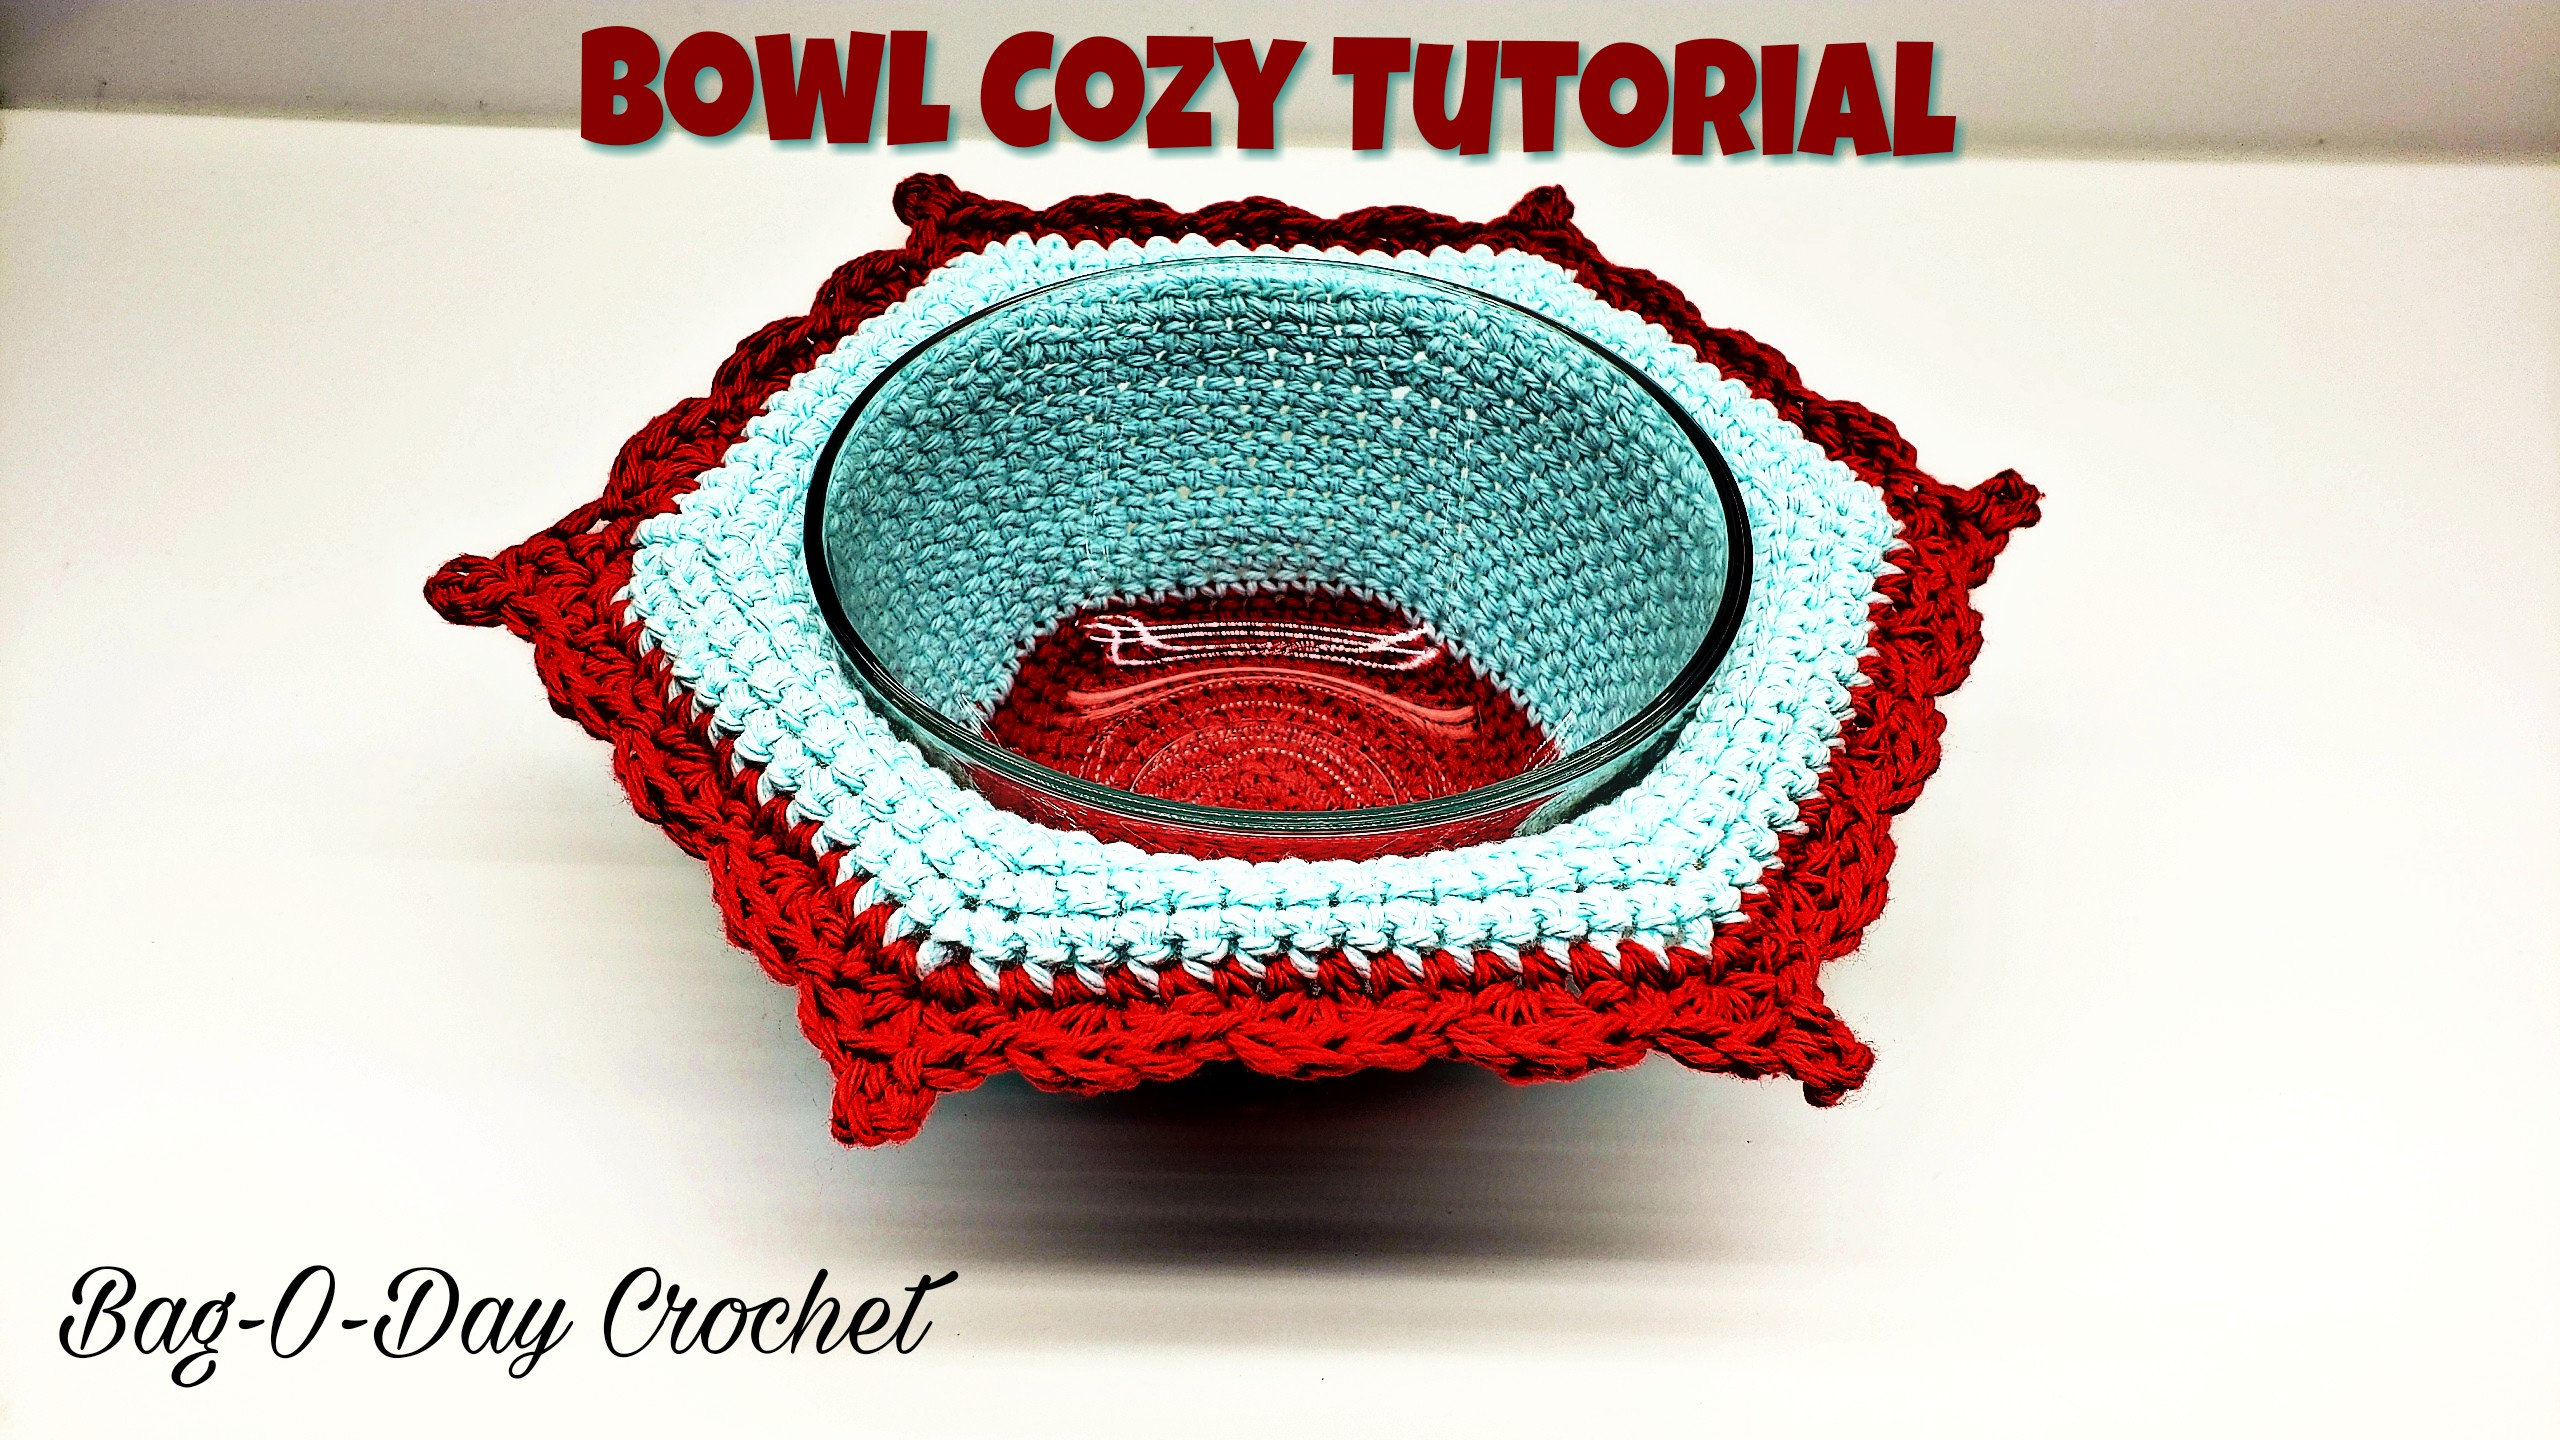 Bowl Cozy Hot Pad Free Crochet Patterns - DIY Magazine  Crochet kitchen,  Crochet basket pattern, Cozy crochet patterns